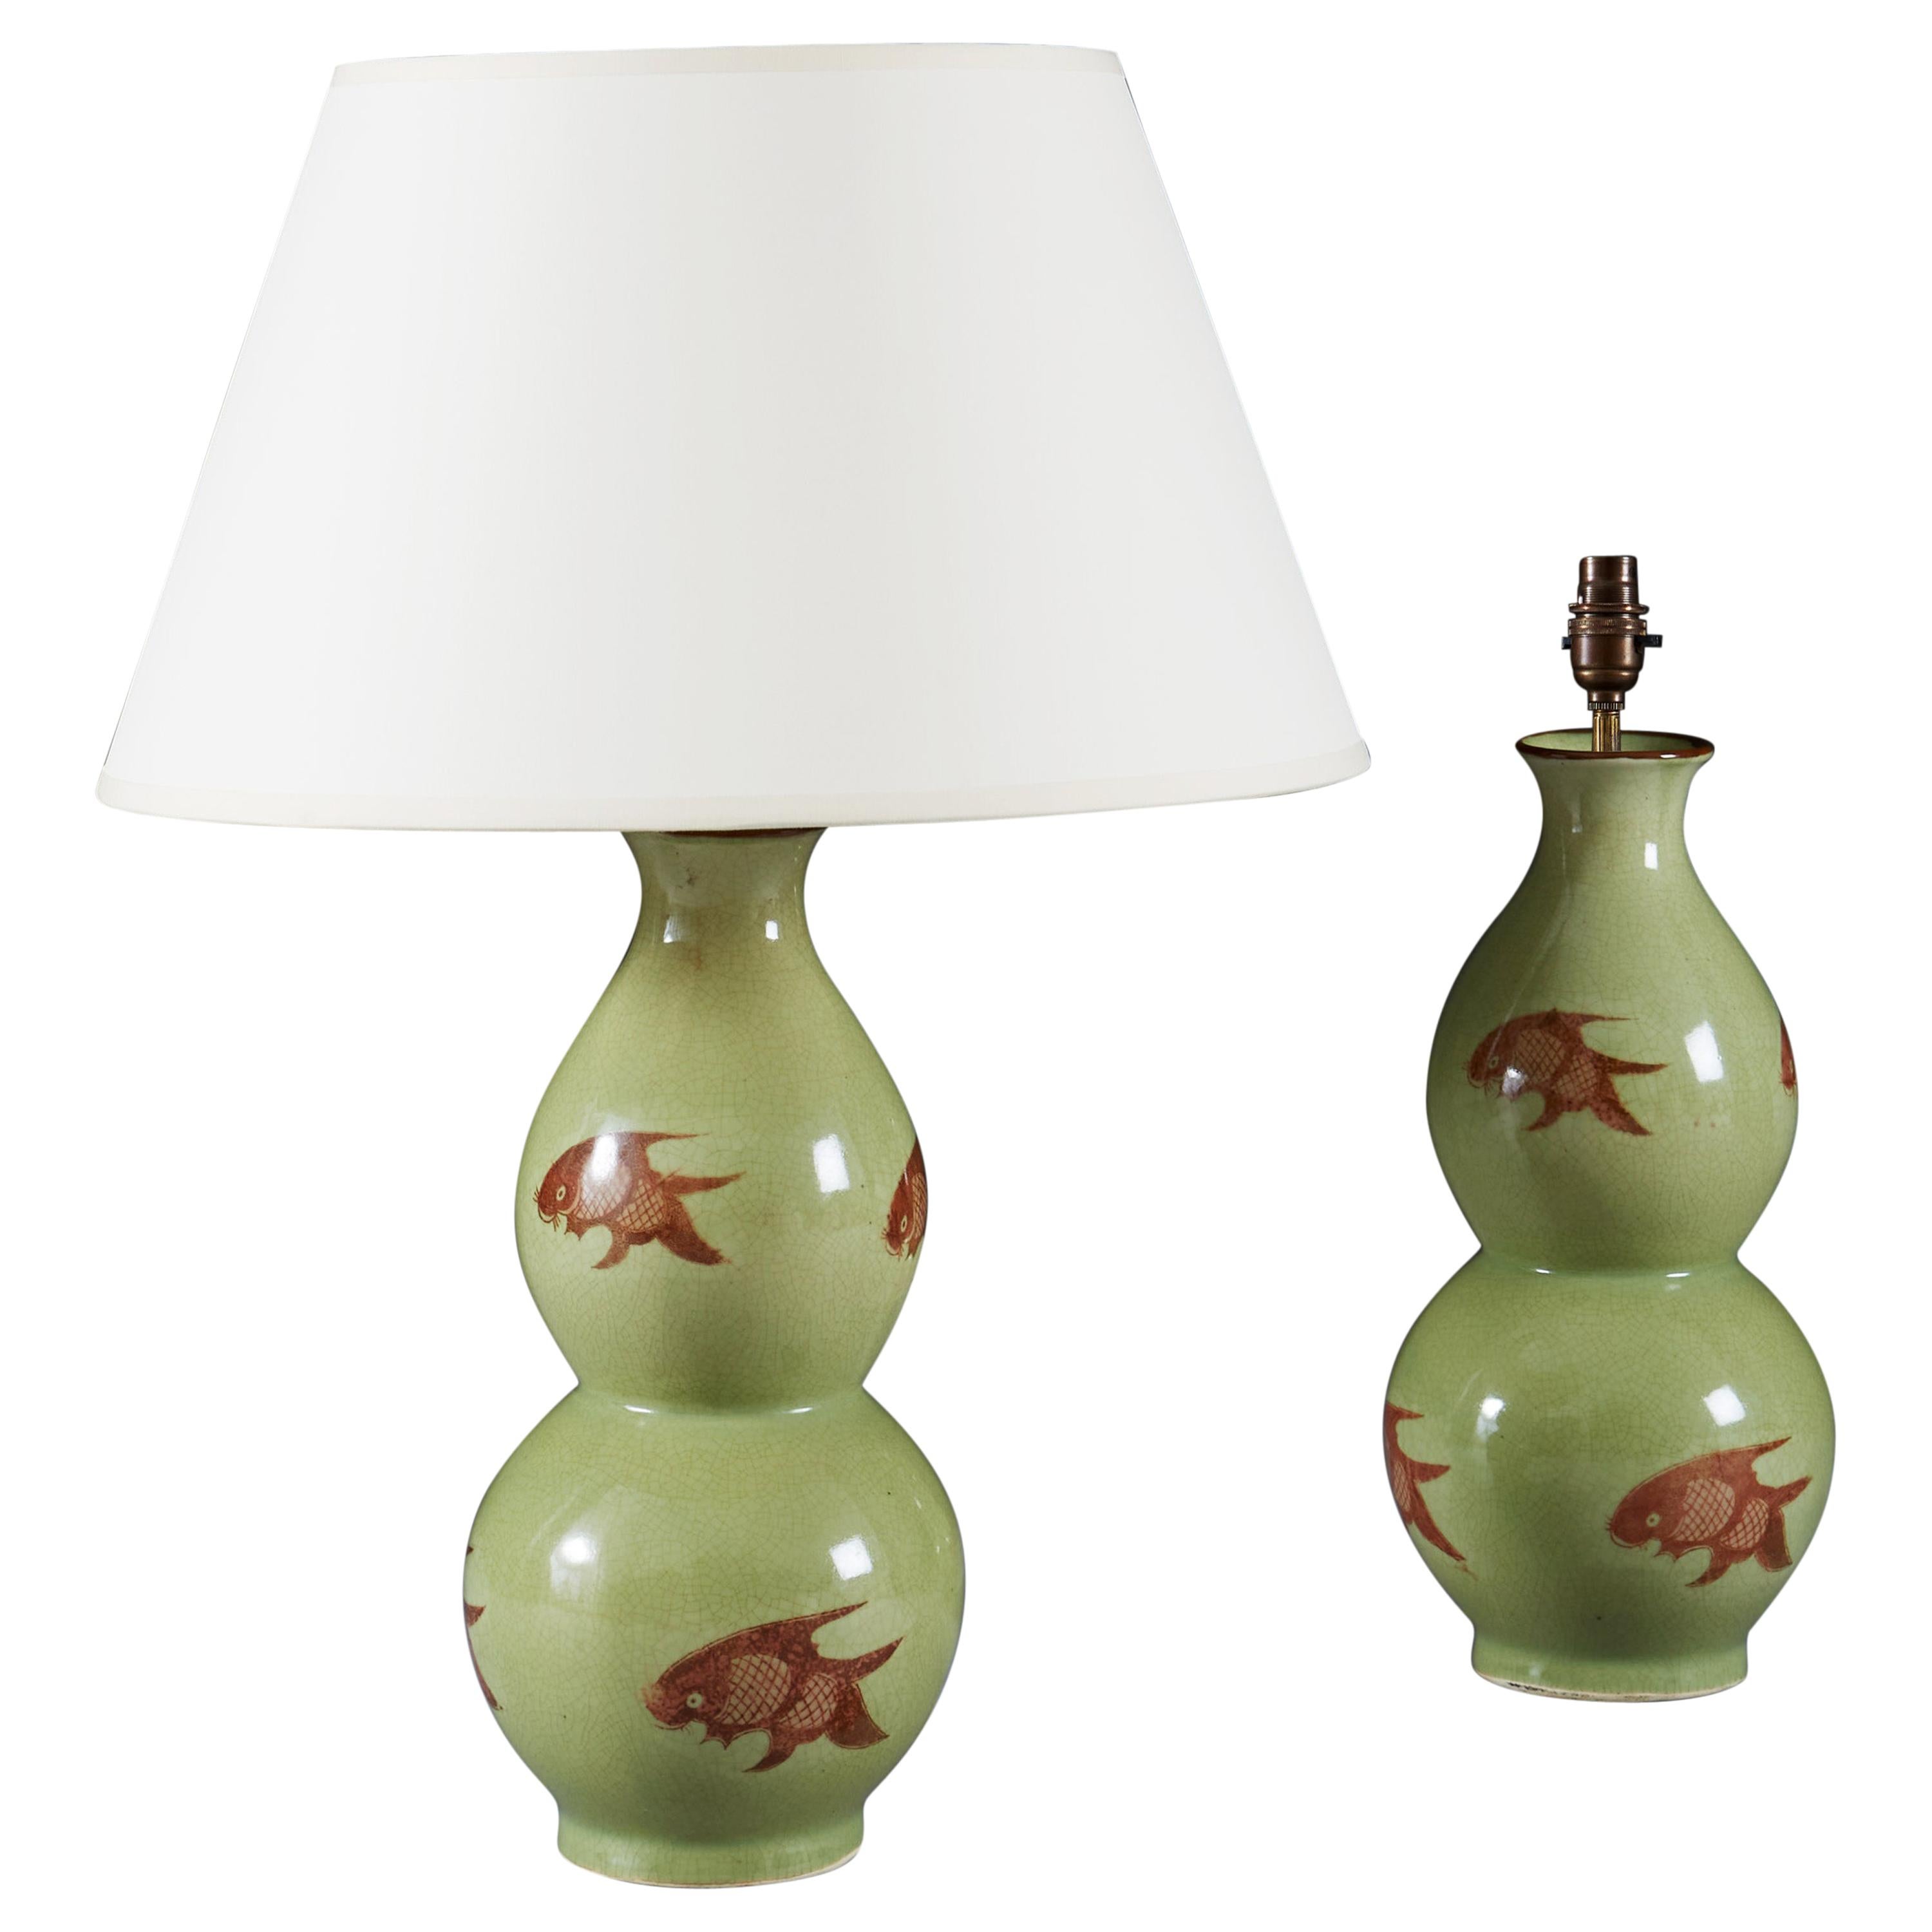 Pair of Double Gourd Goldish Celadon Glaze Vases as Table Lamps